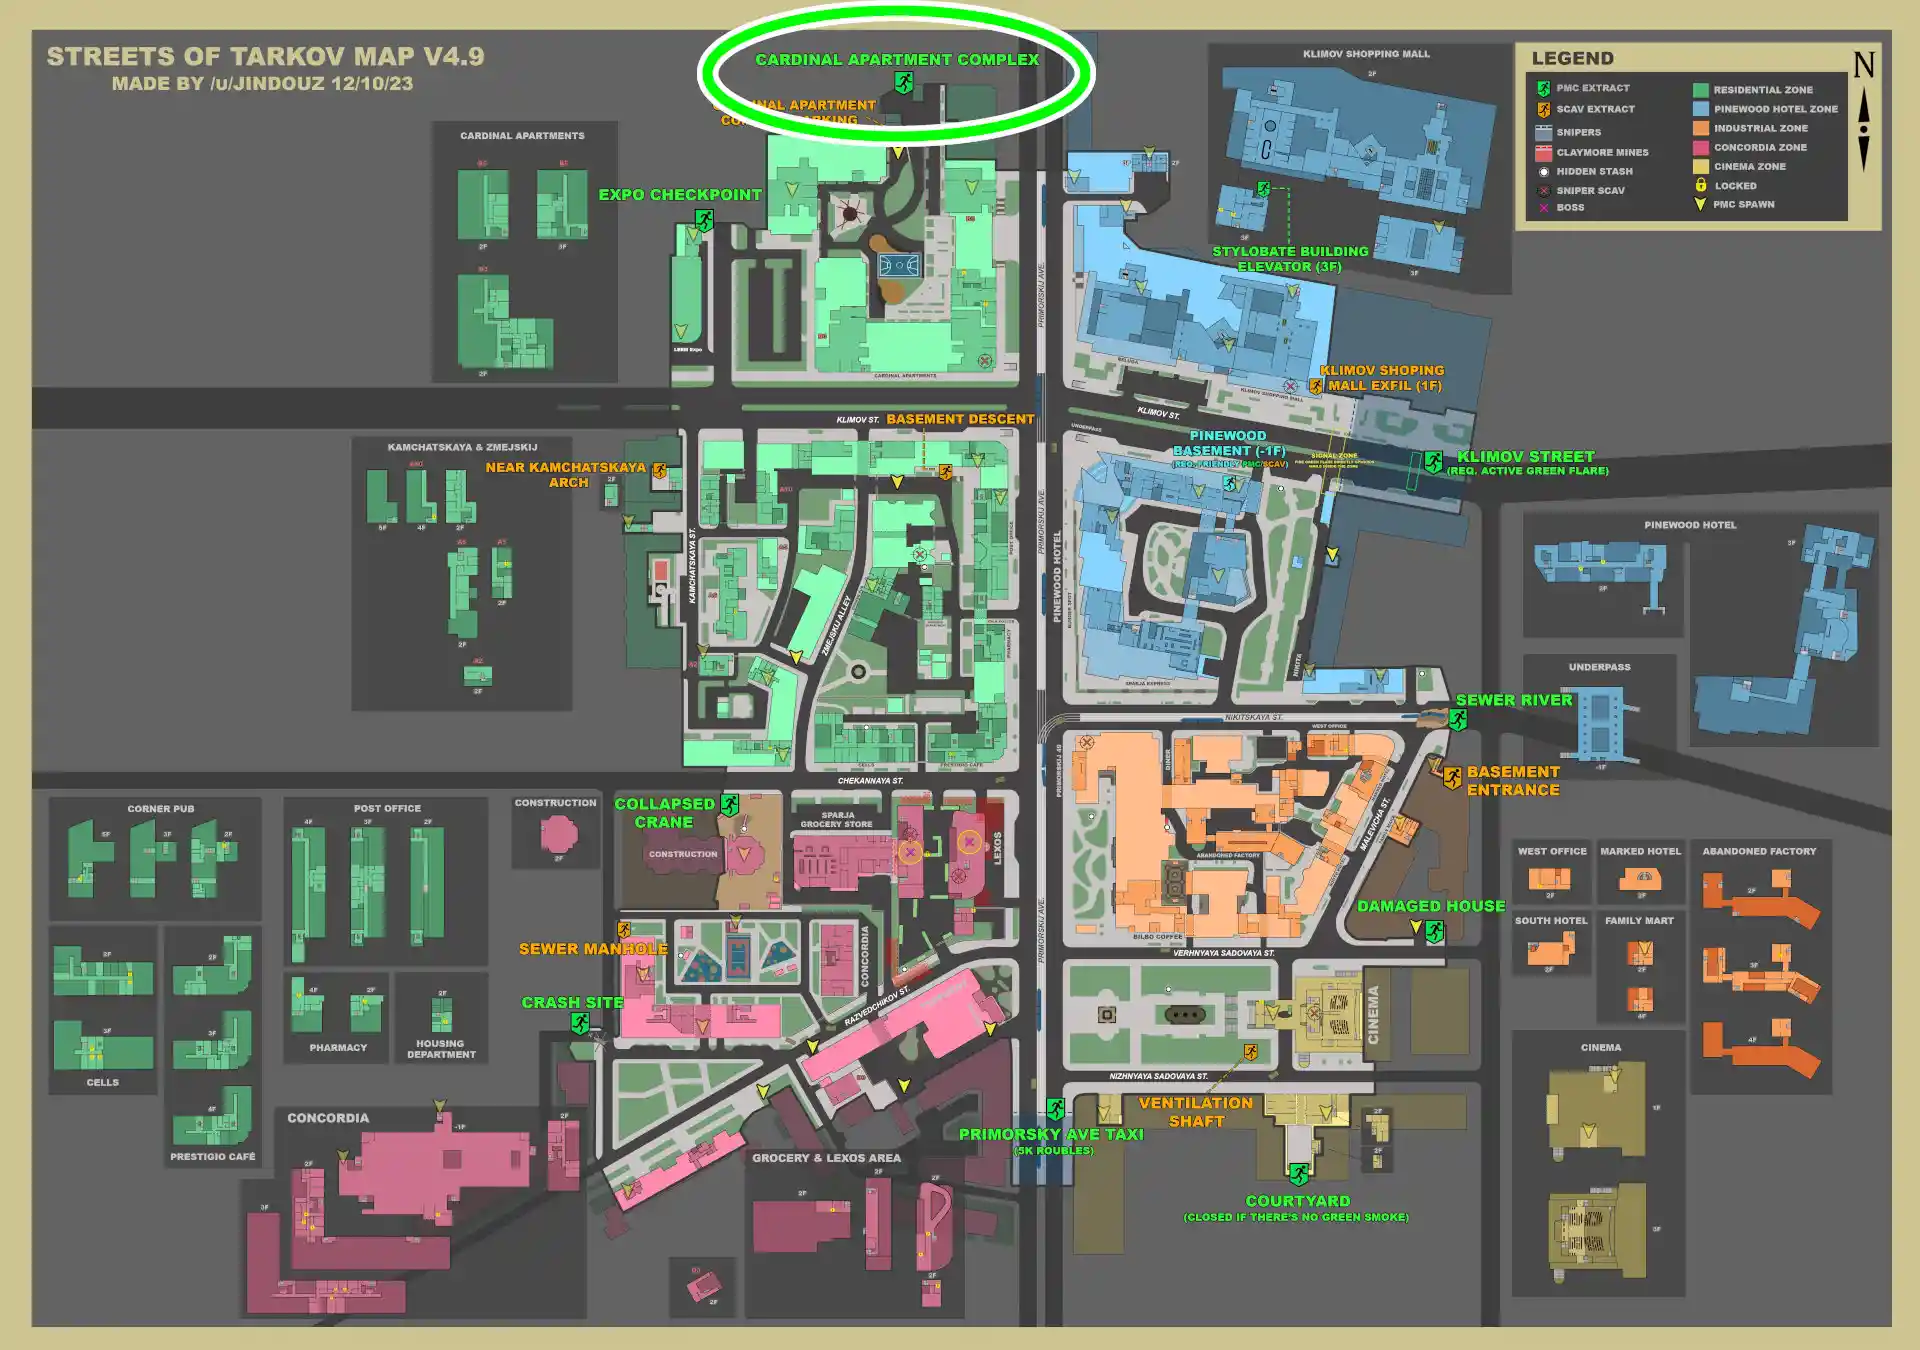 STREETS_OF_TARKOV-ESC-Cardinal_Apartment_Complex-MAP.jpg